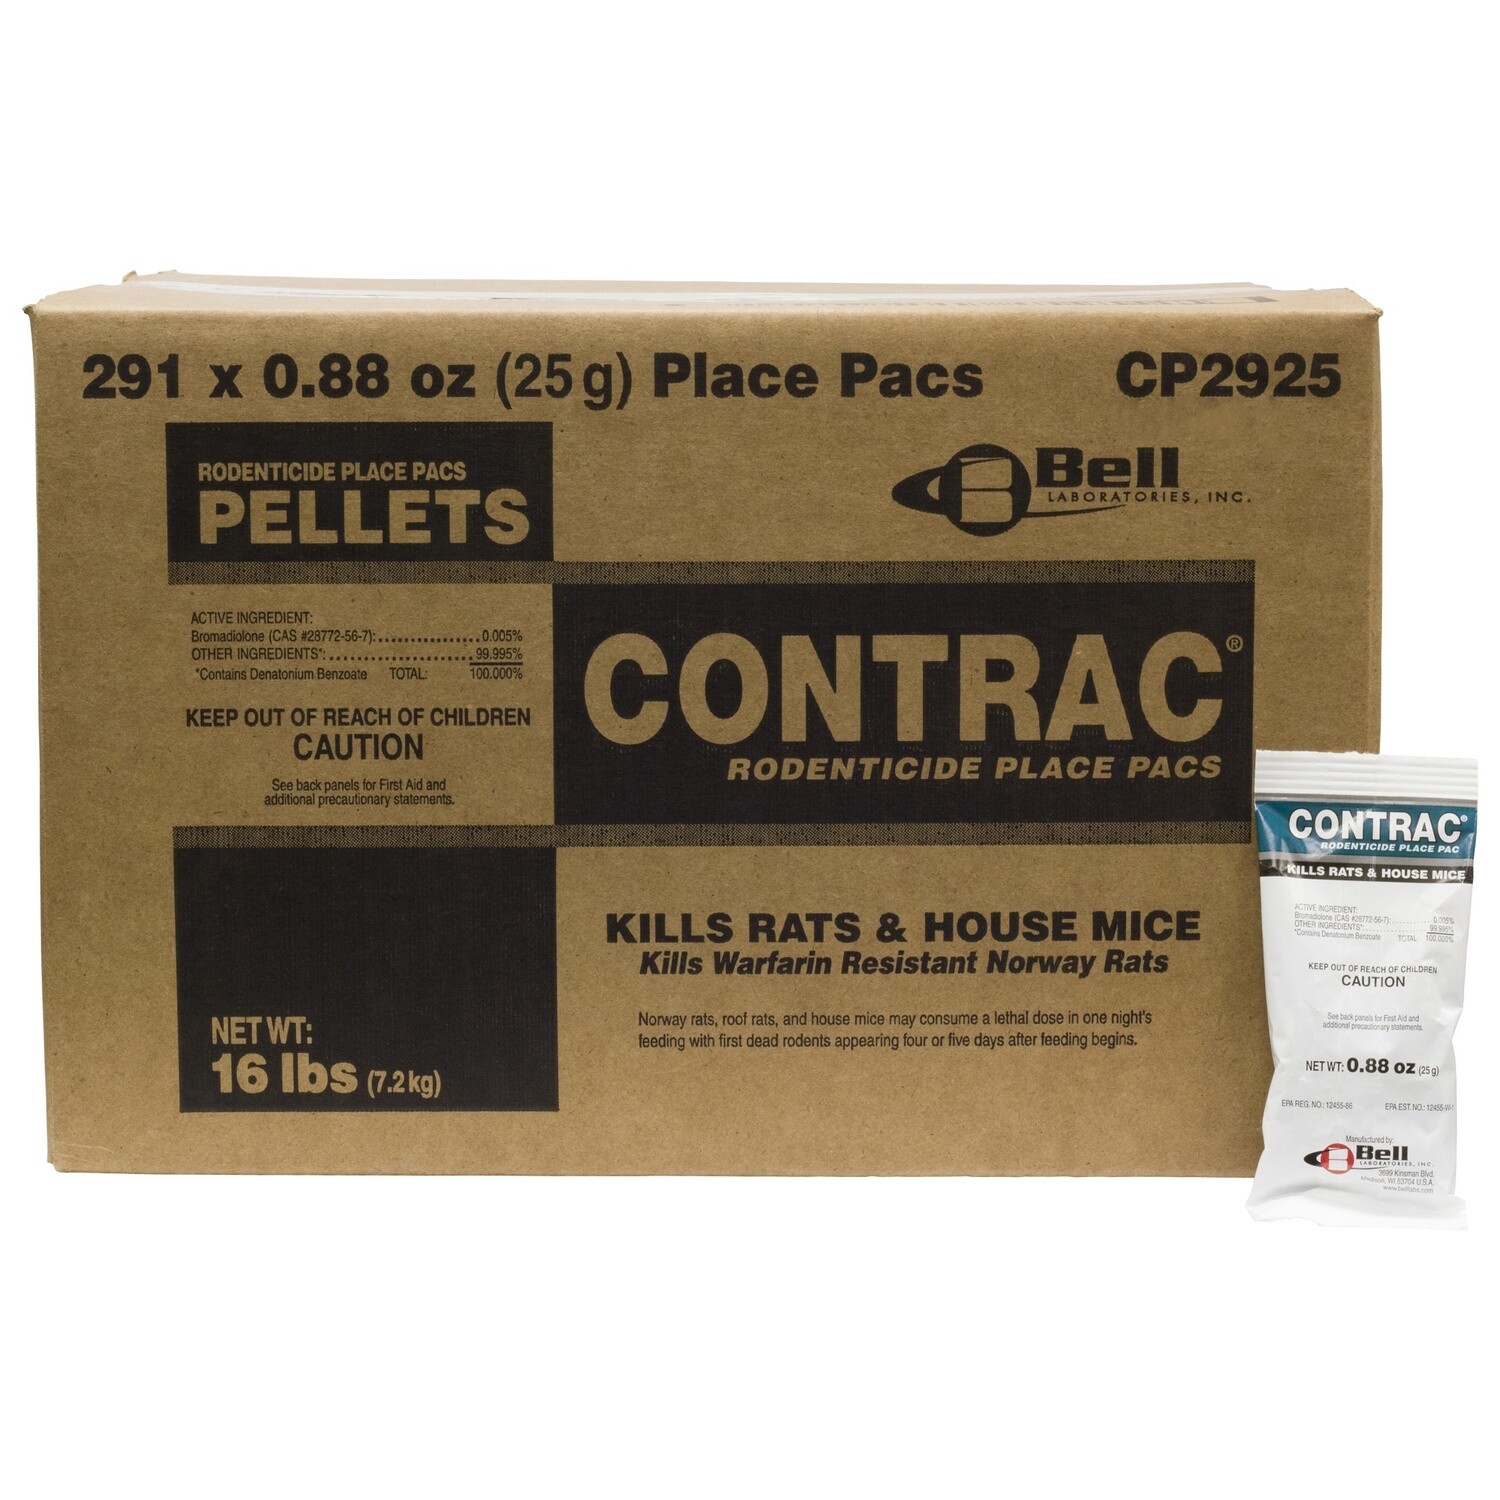 Contrac Rodent Pellet Place Packs (291 x 25 gram packs)